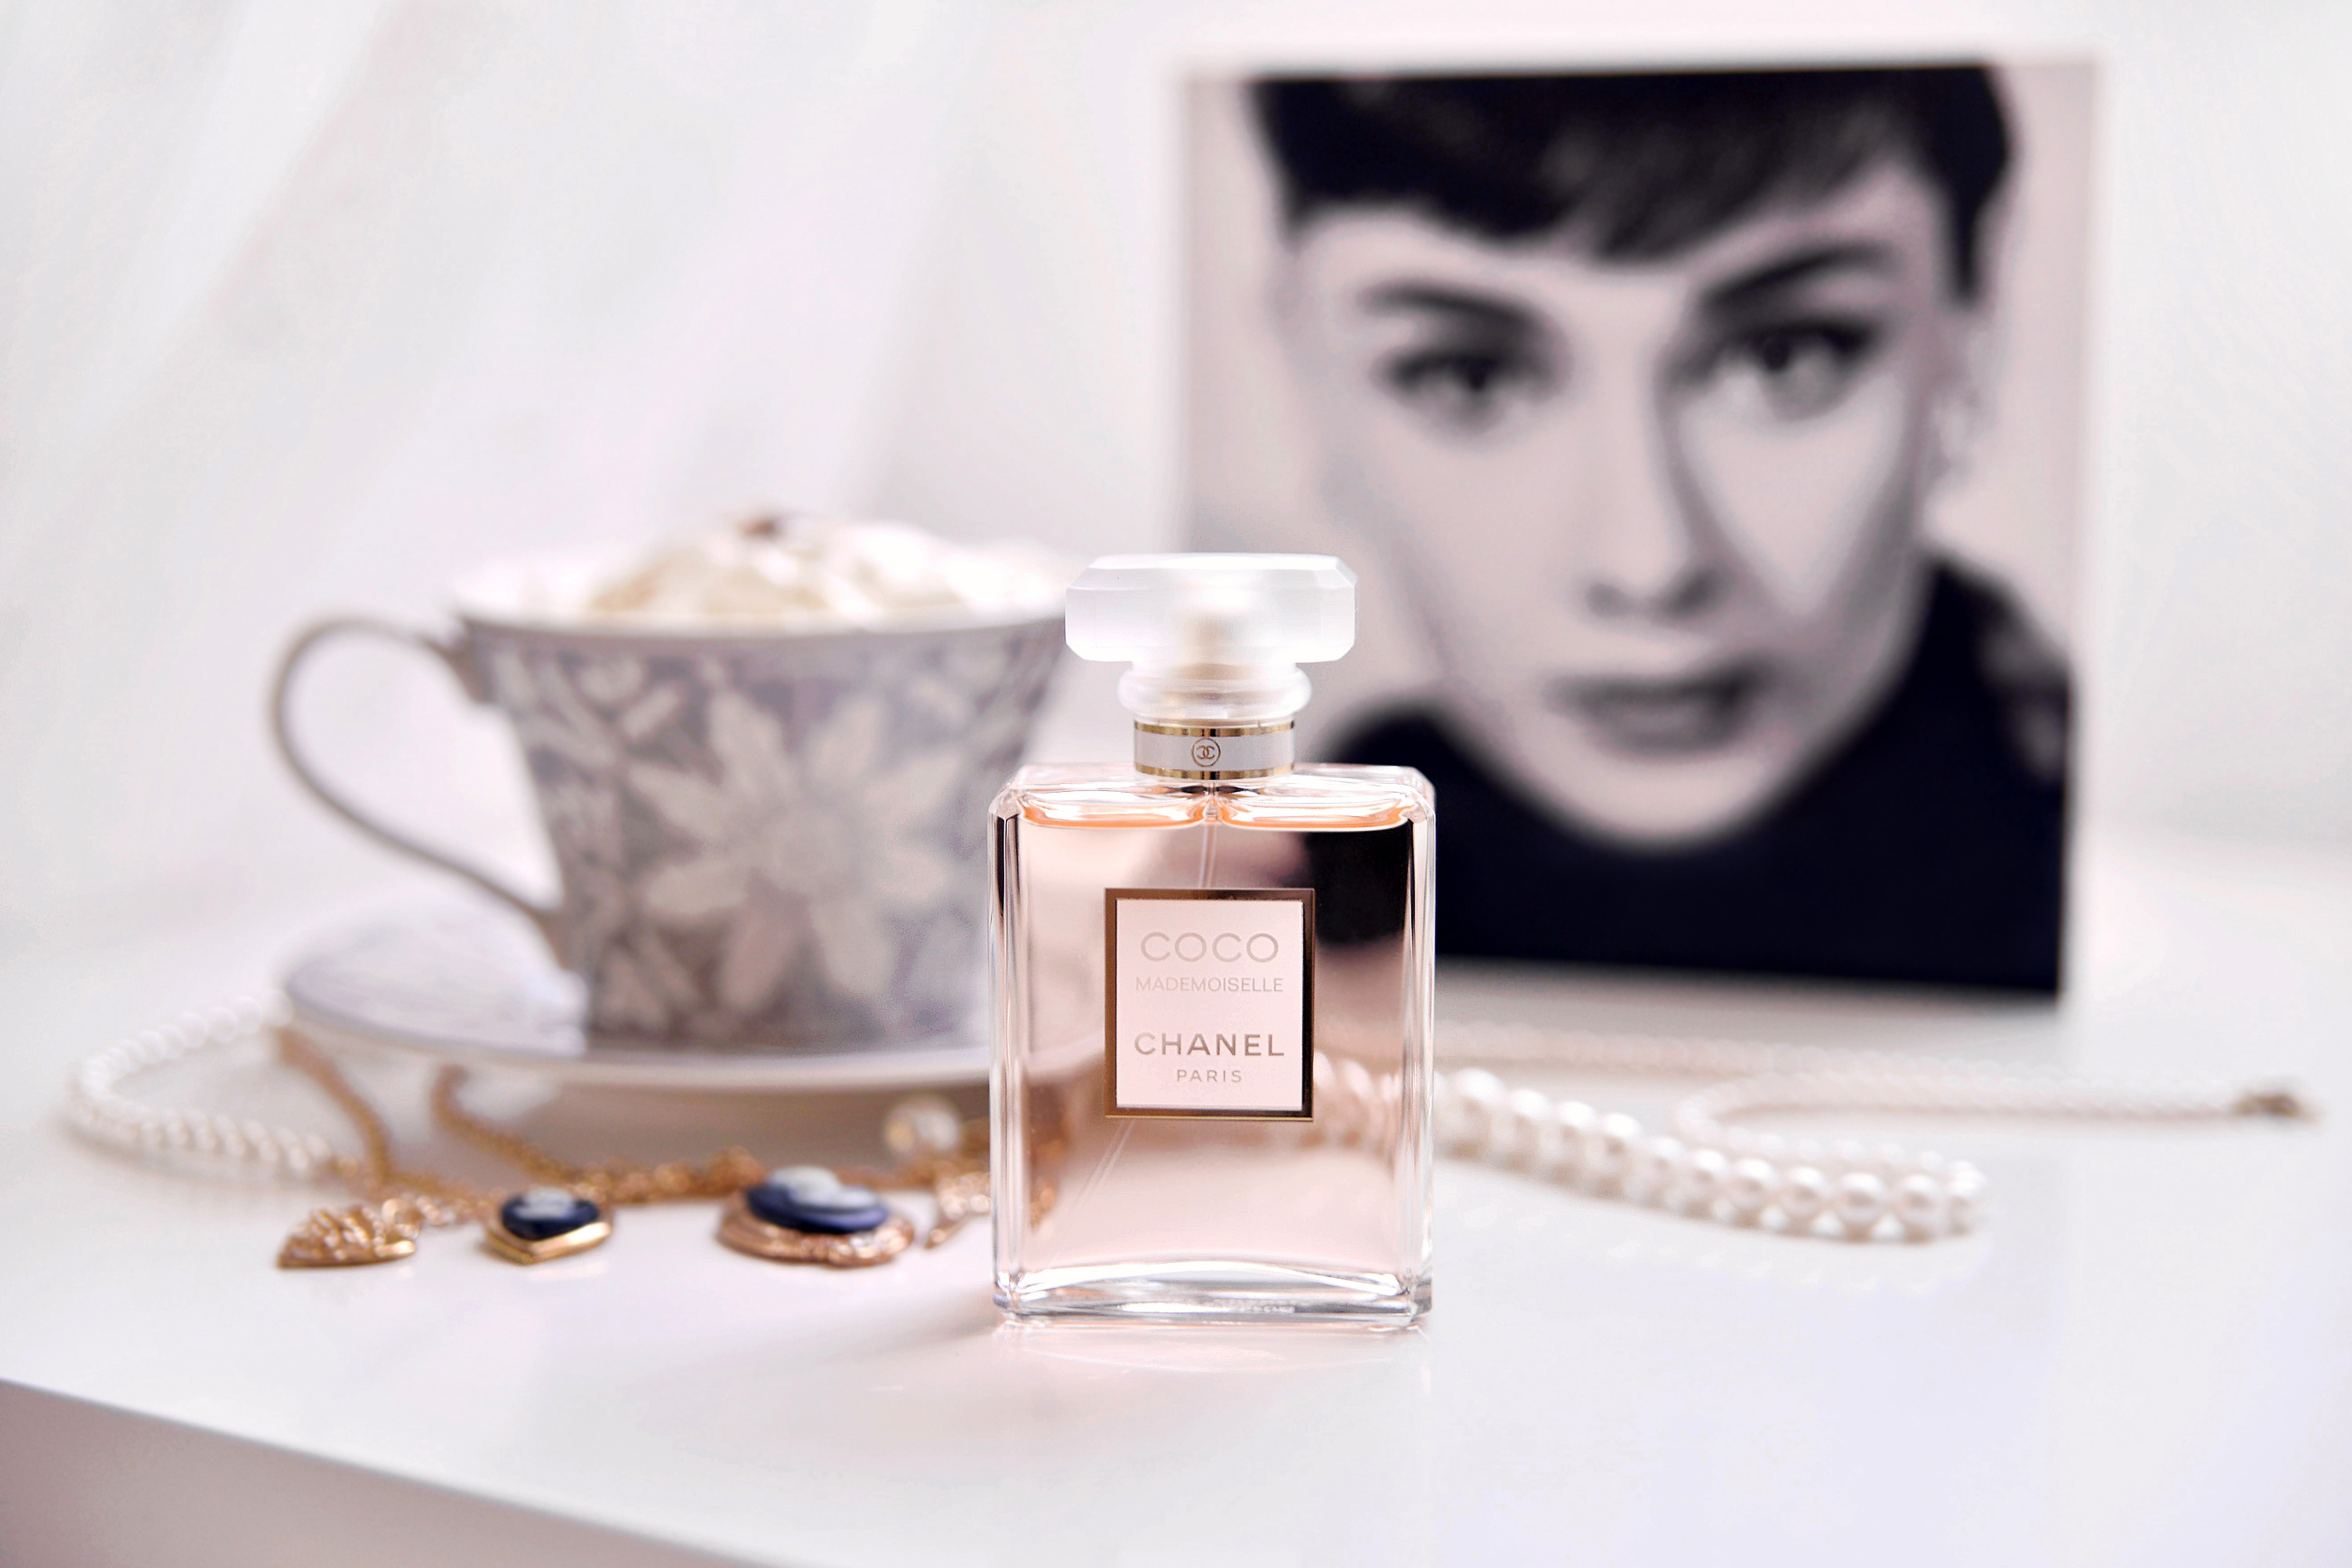 Chanel Coco Mademoiselle Perfume Audrey Hepburn Wallpaper Hd Wallpapers